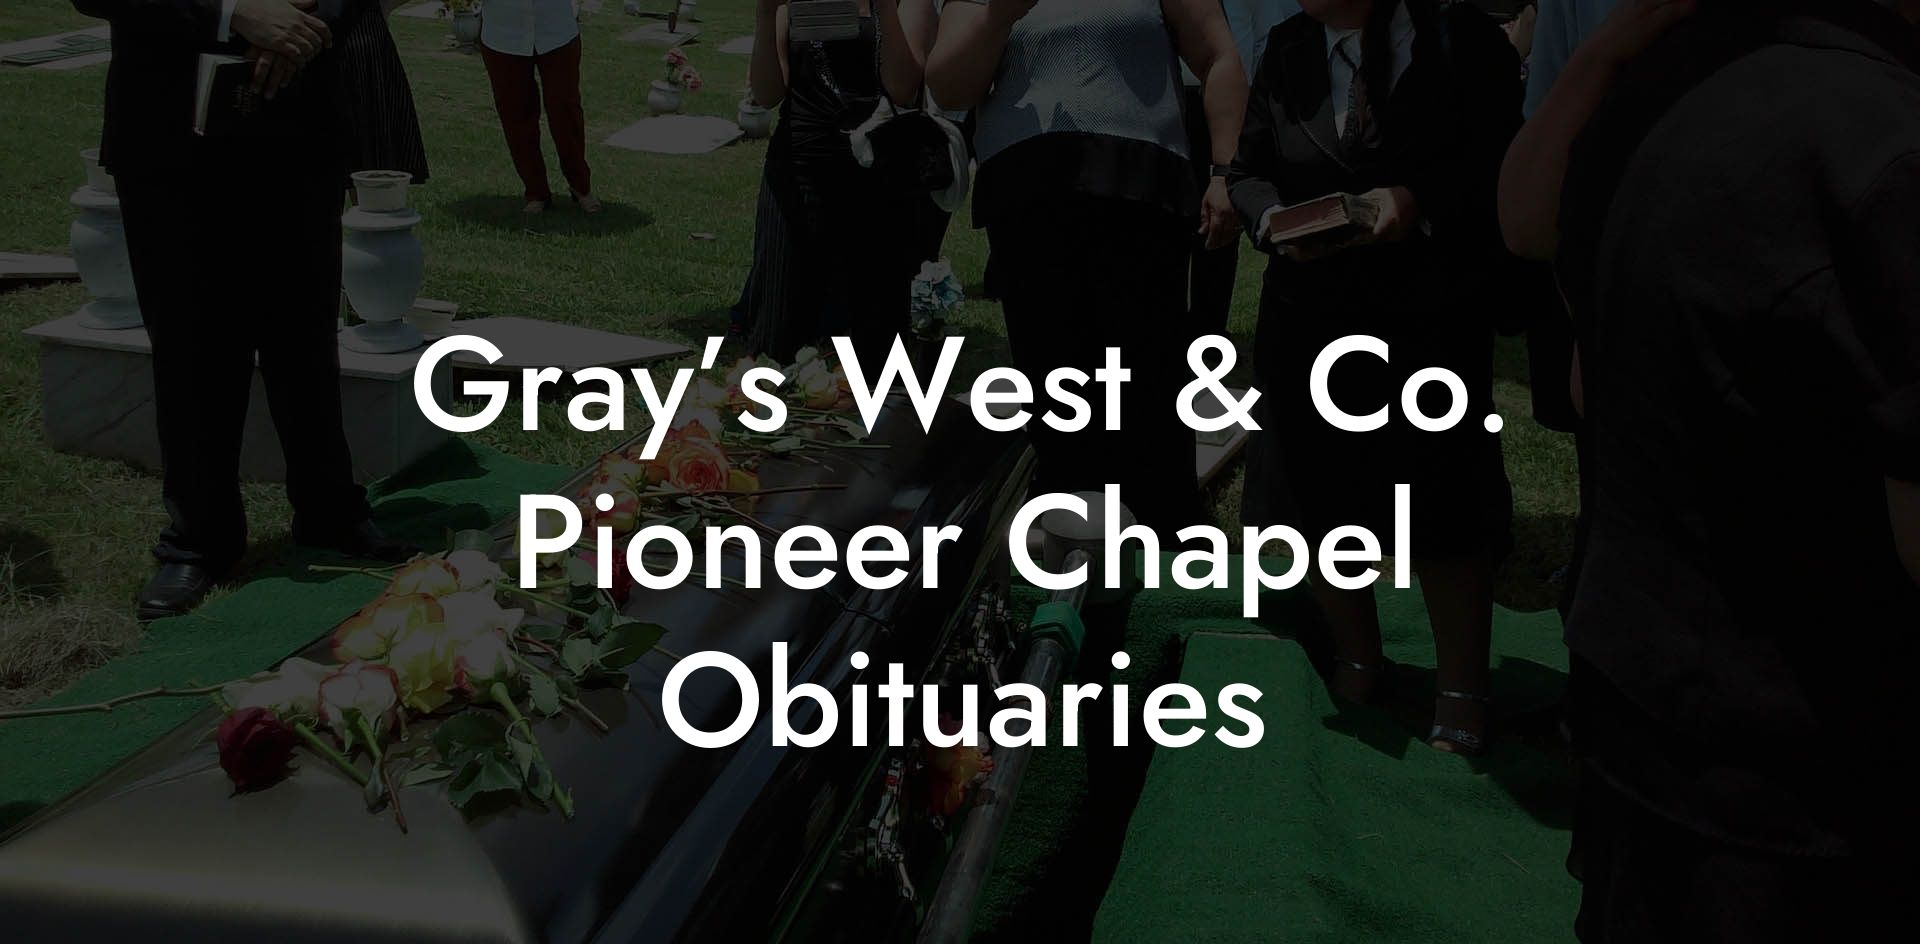 Gray’s West & Co. Pioneer Chapel Obituaries